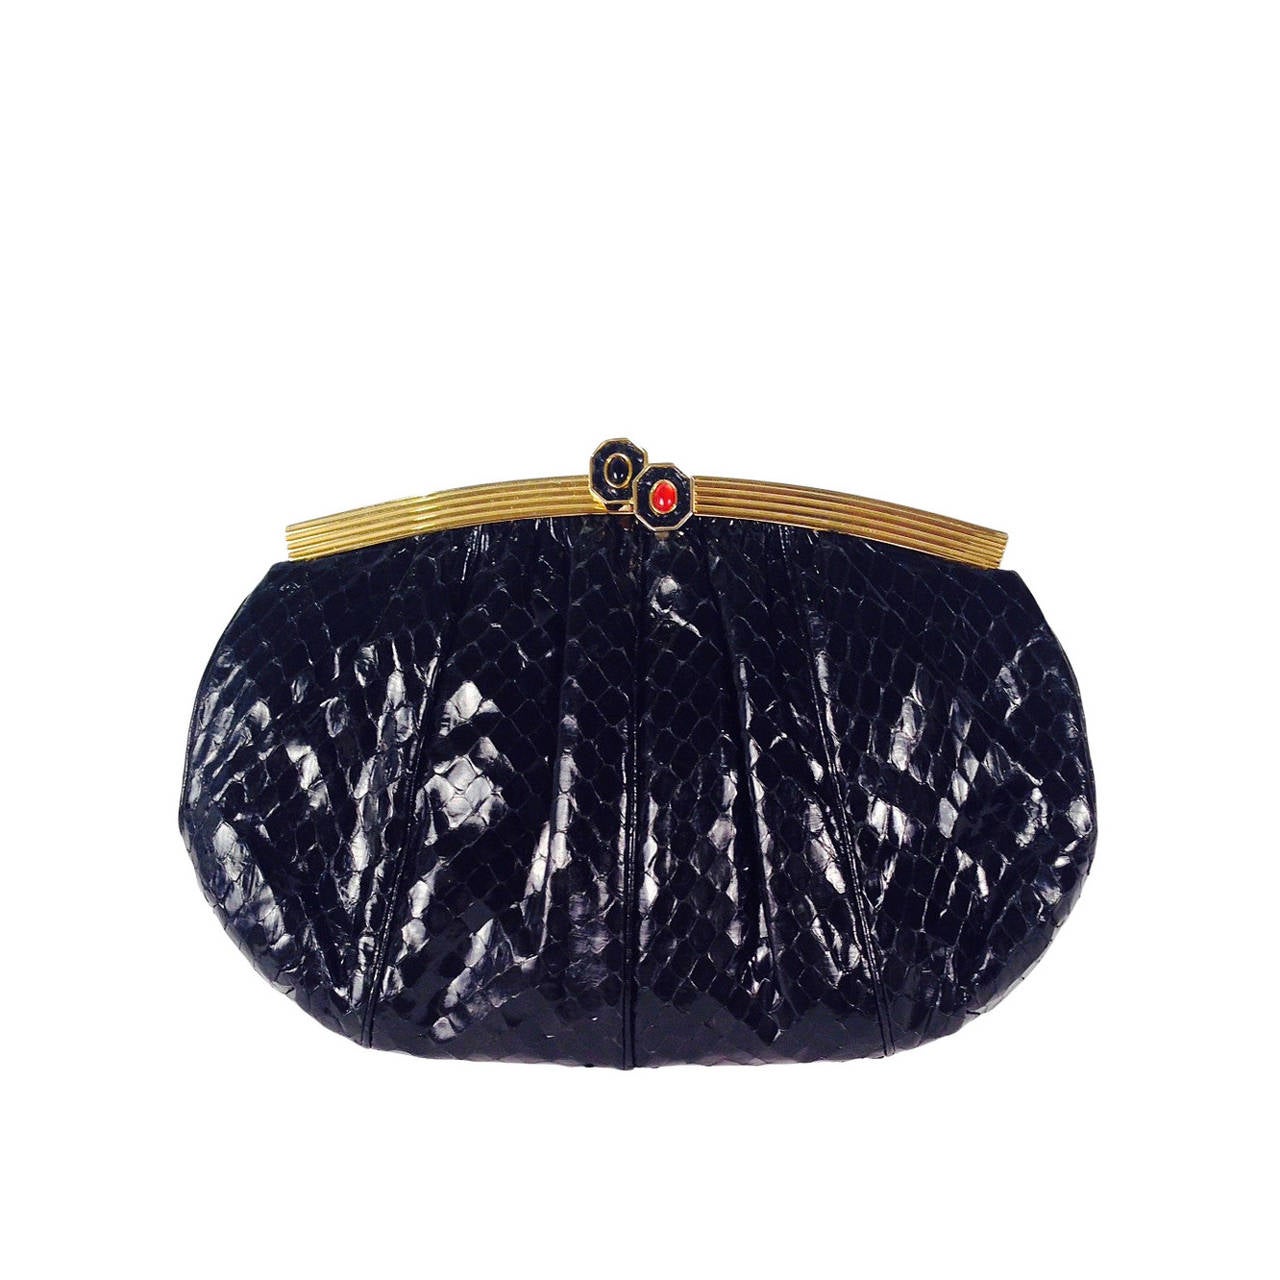 Vintage Judith Leiber Black Snakeskin Evening Bag With Jeweled Clasp For Sale